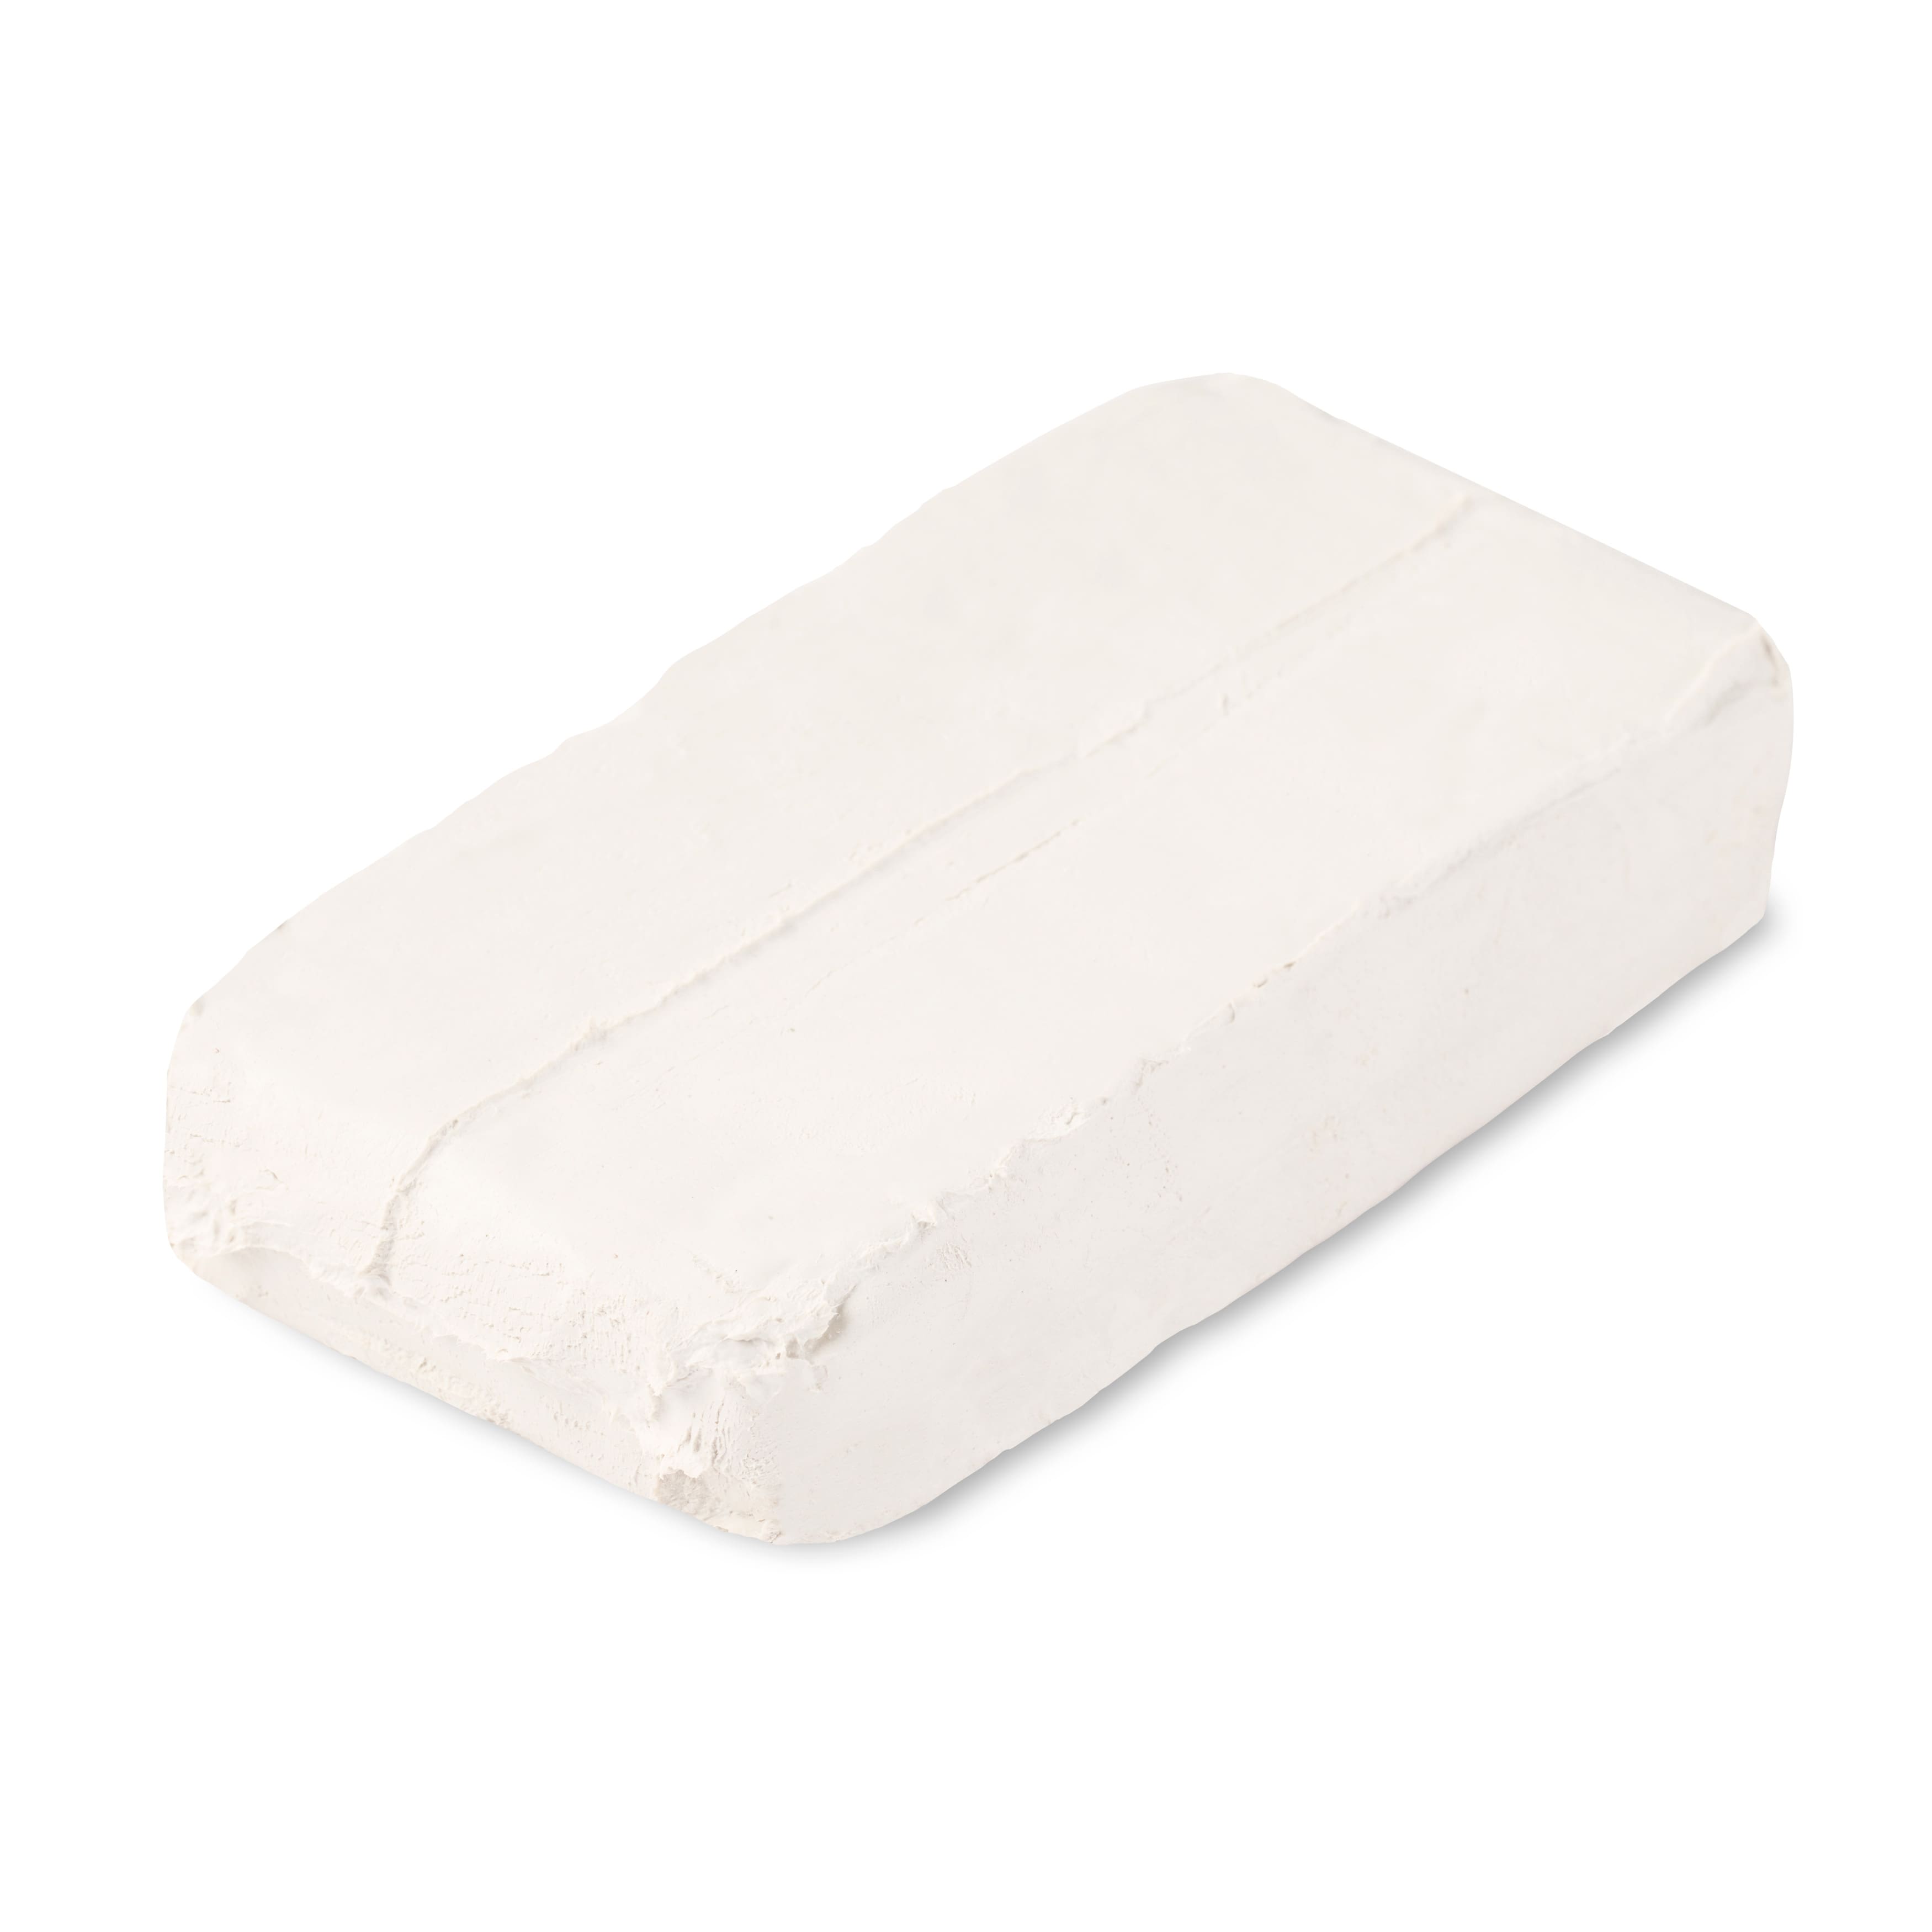 Pixiss Modeling Foam Clay - Premium Foam Air Dry Clay Cosplay Foam, 15